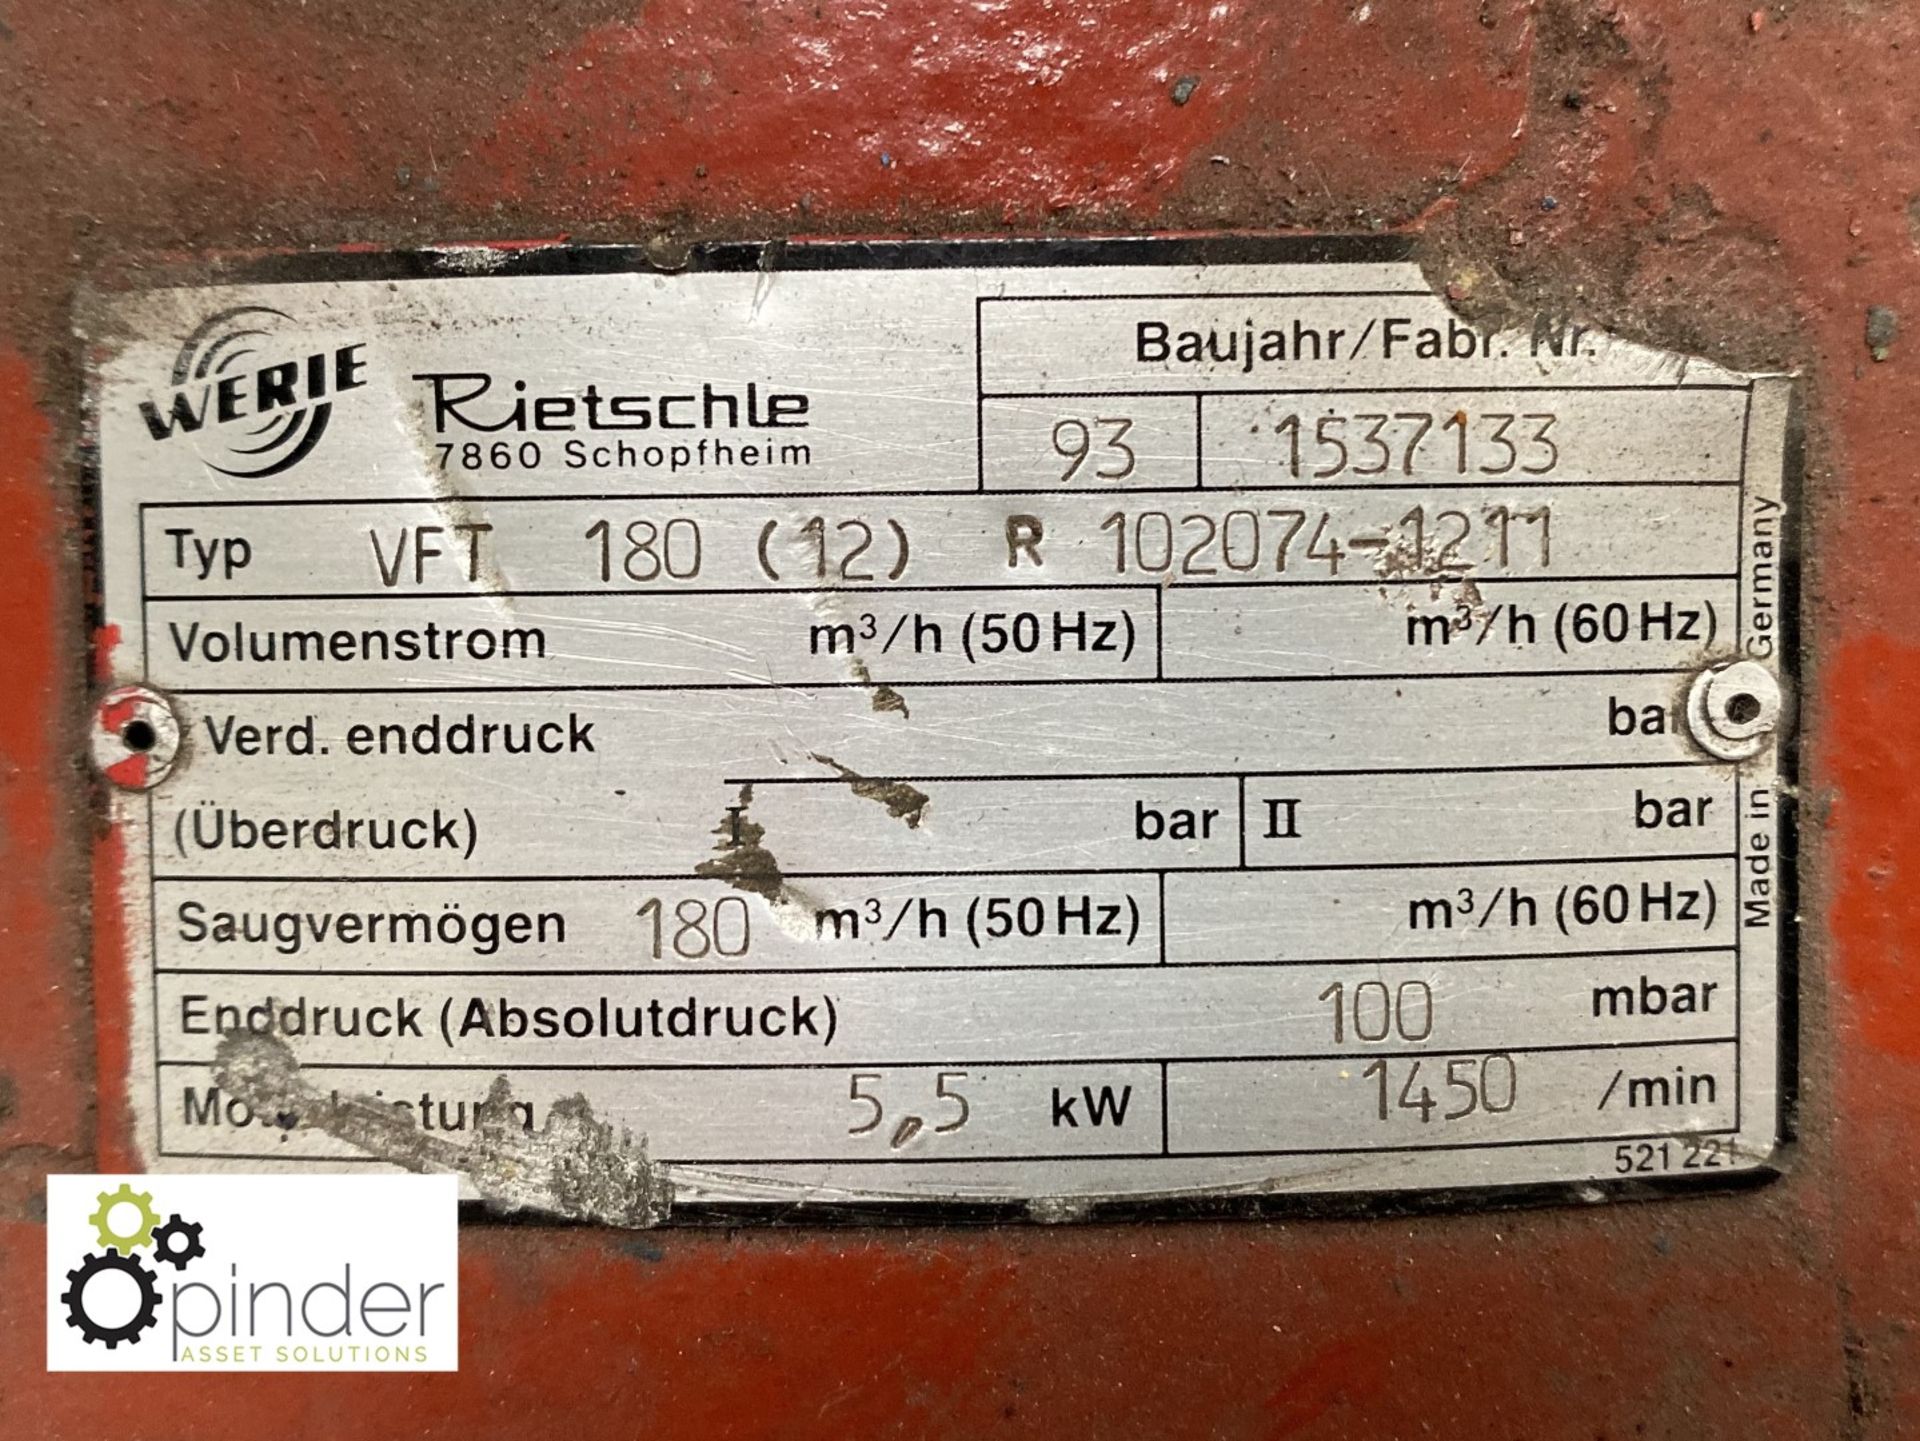 Rietschle VFT180 (12) Vacuum Pump, 180m³/hr, 5.5kw - Image 3 of 3